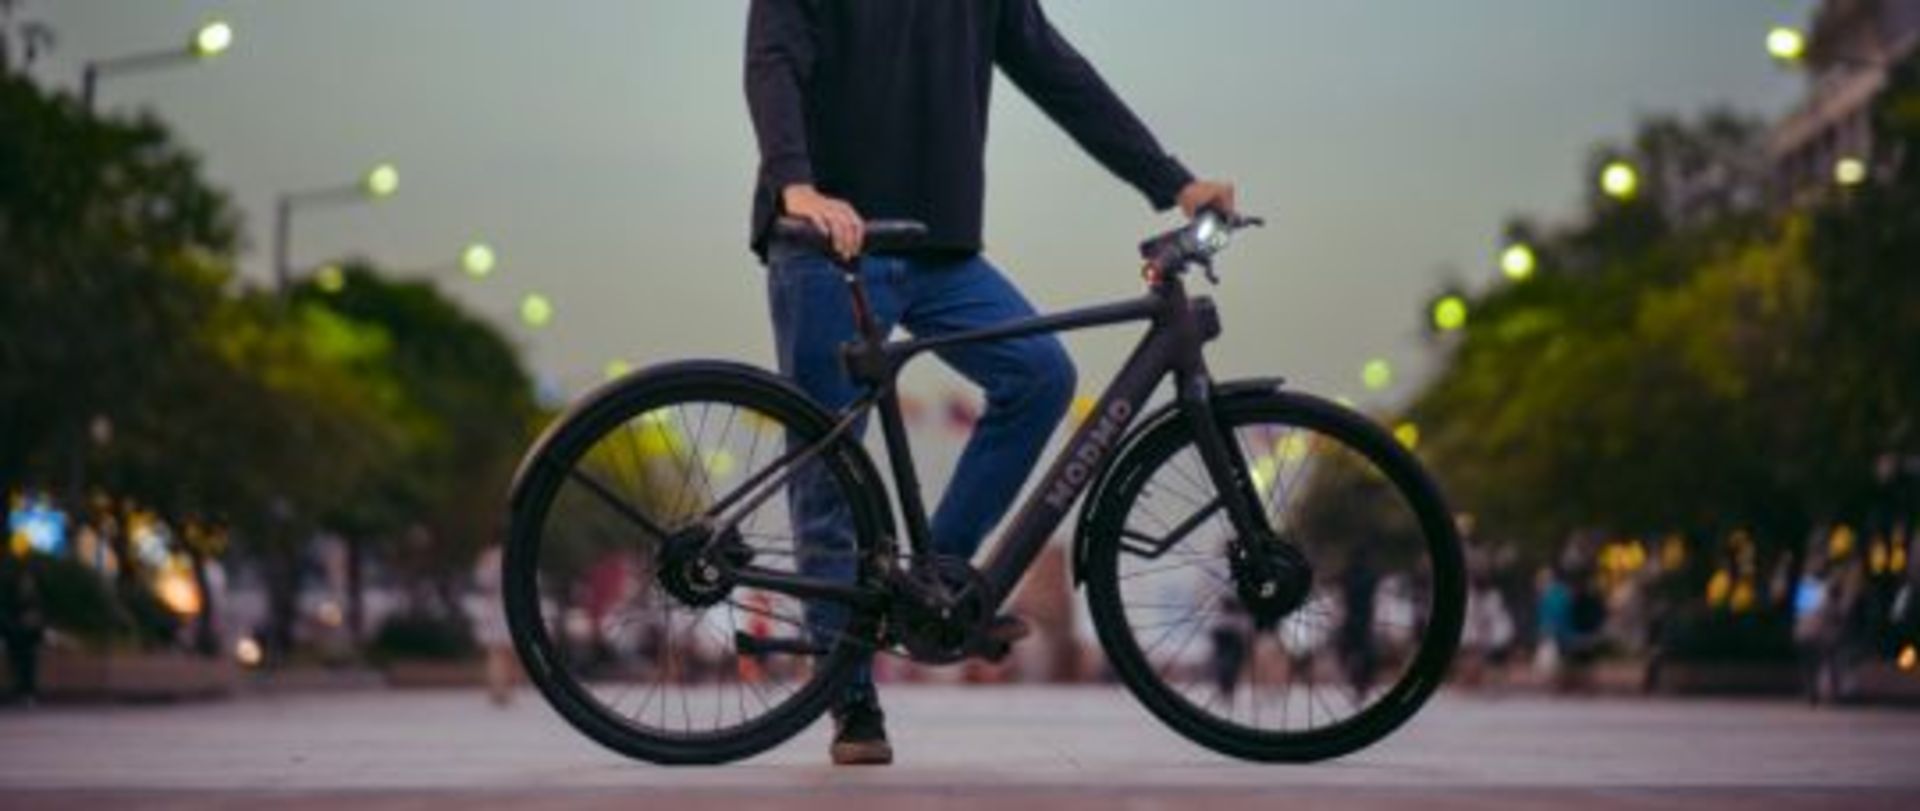 Modmo Saigon+ Electric Bicycle - RRP £2800 - Size L (Rider 175-190cm) - Image 13 of 19